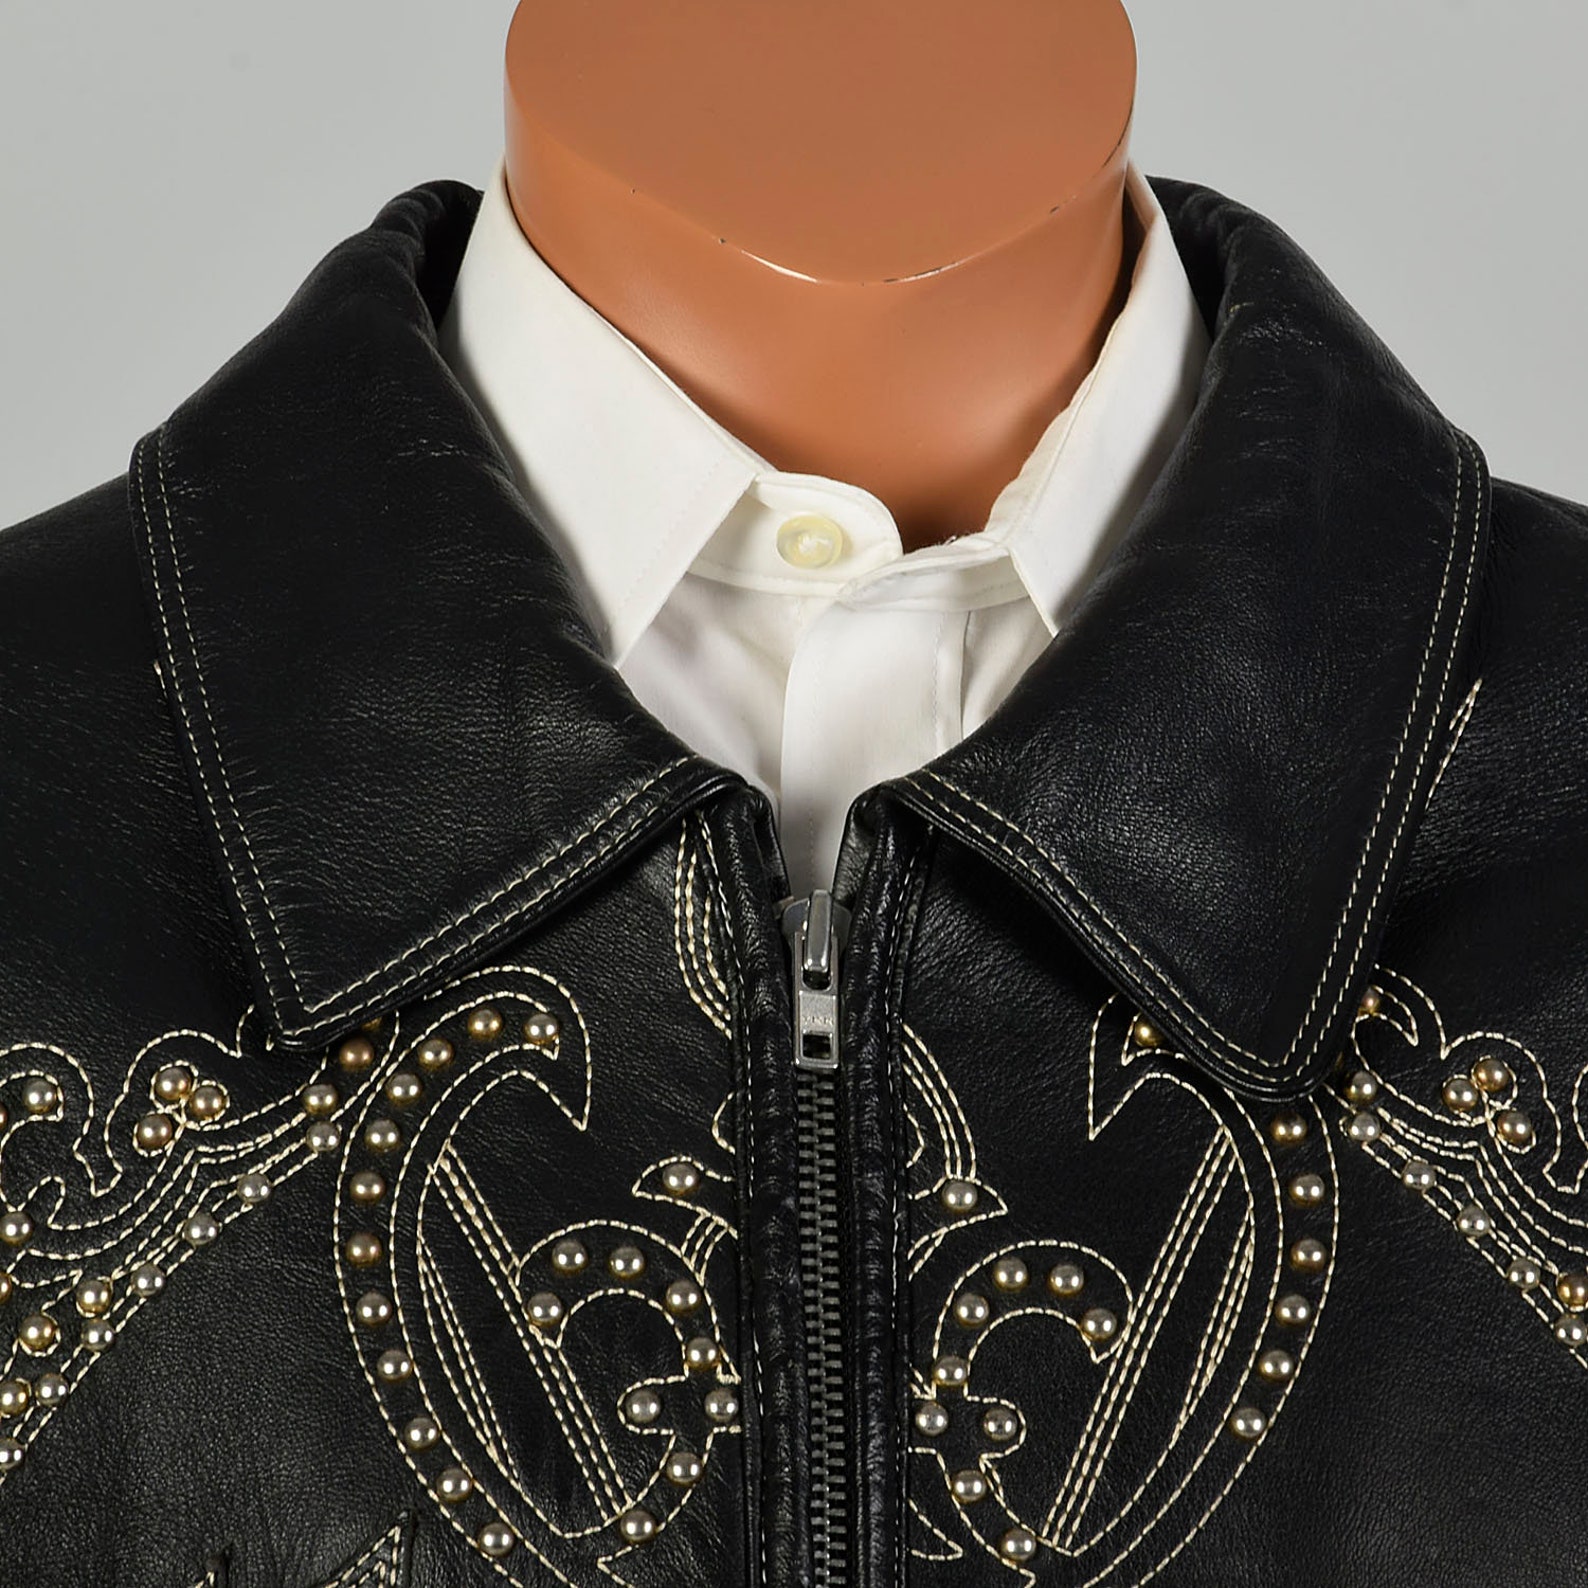 XL Pelle Pelle Jacket Black Leather Jacket Studded Topstitched - Etsy